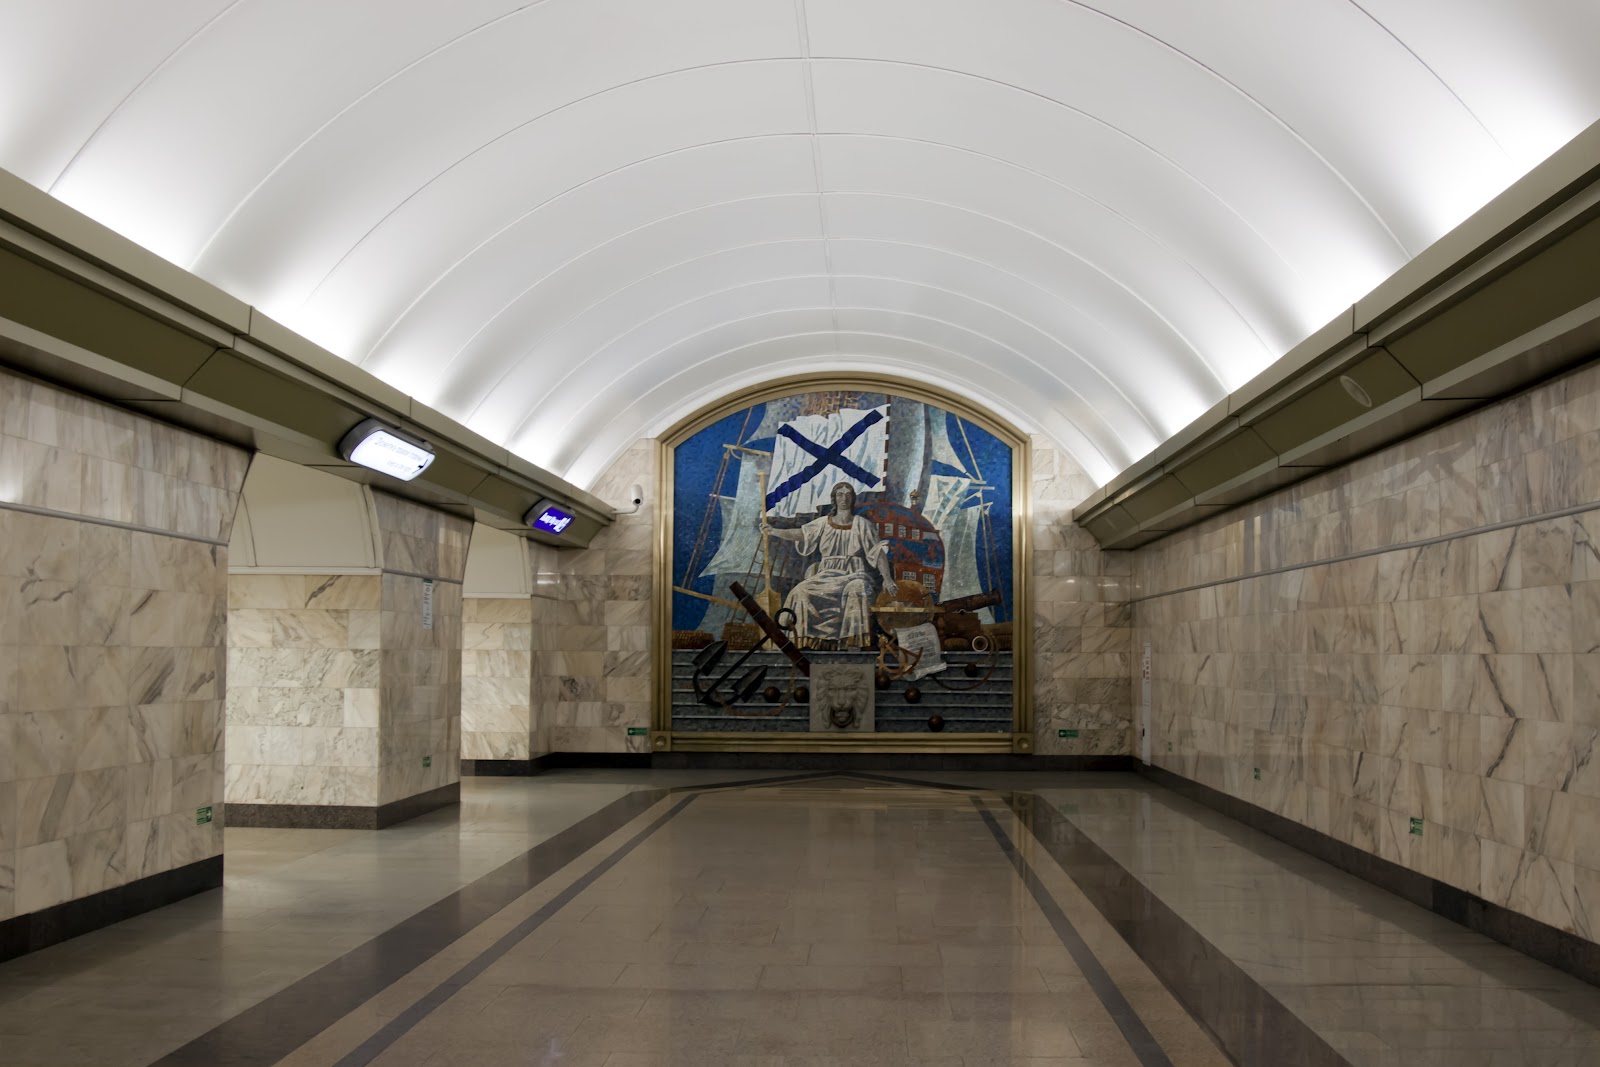 Станции метро Санкт-Петербурга